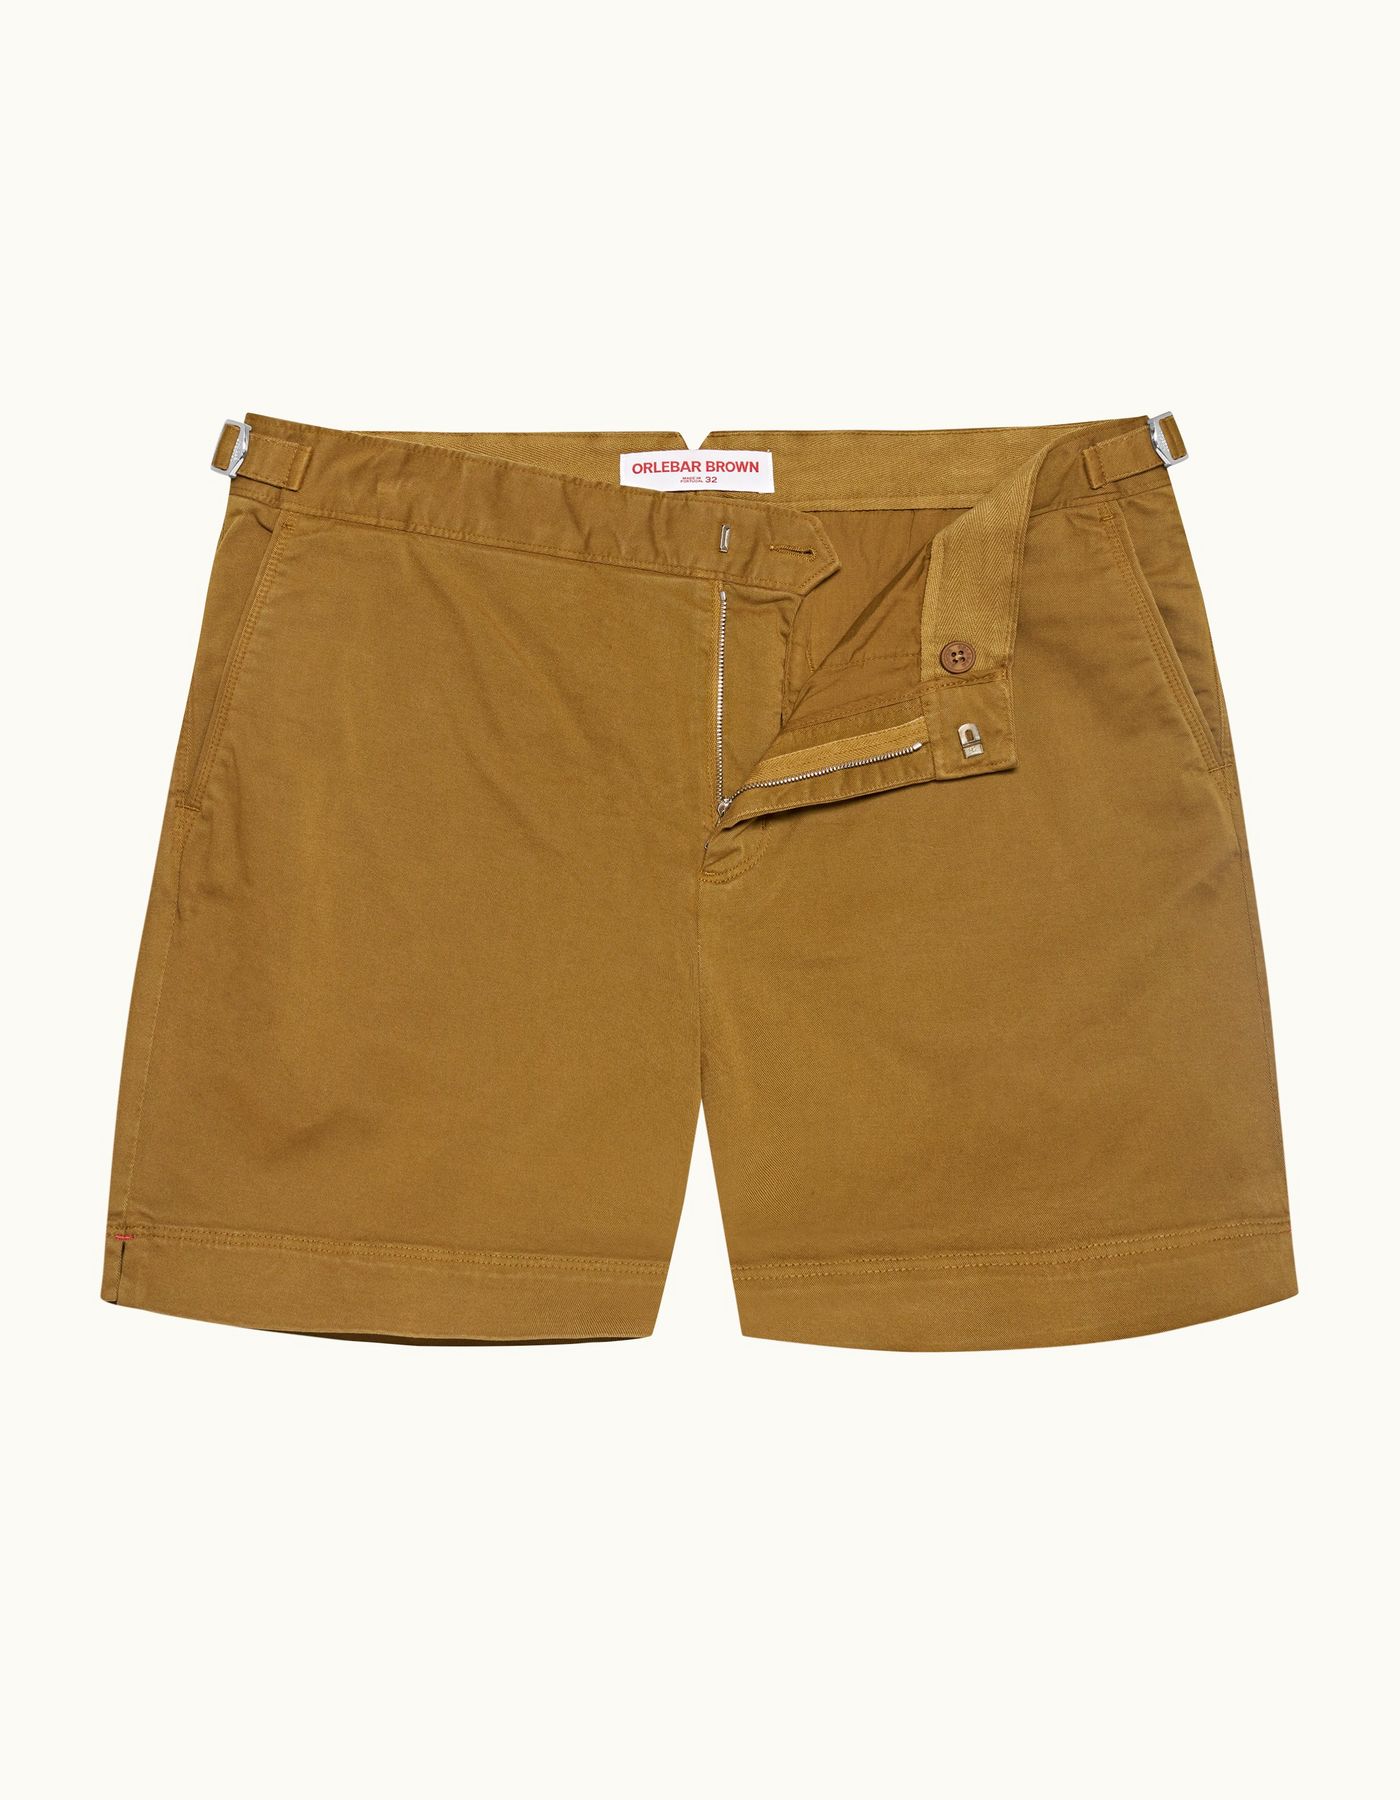 Bulldog Stretch-Cotton - Mens Golden Khaki Stretch-Cotton Mid-Length Shorts